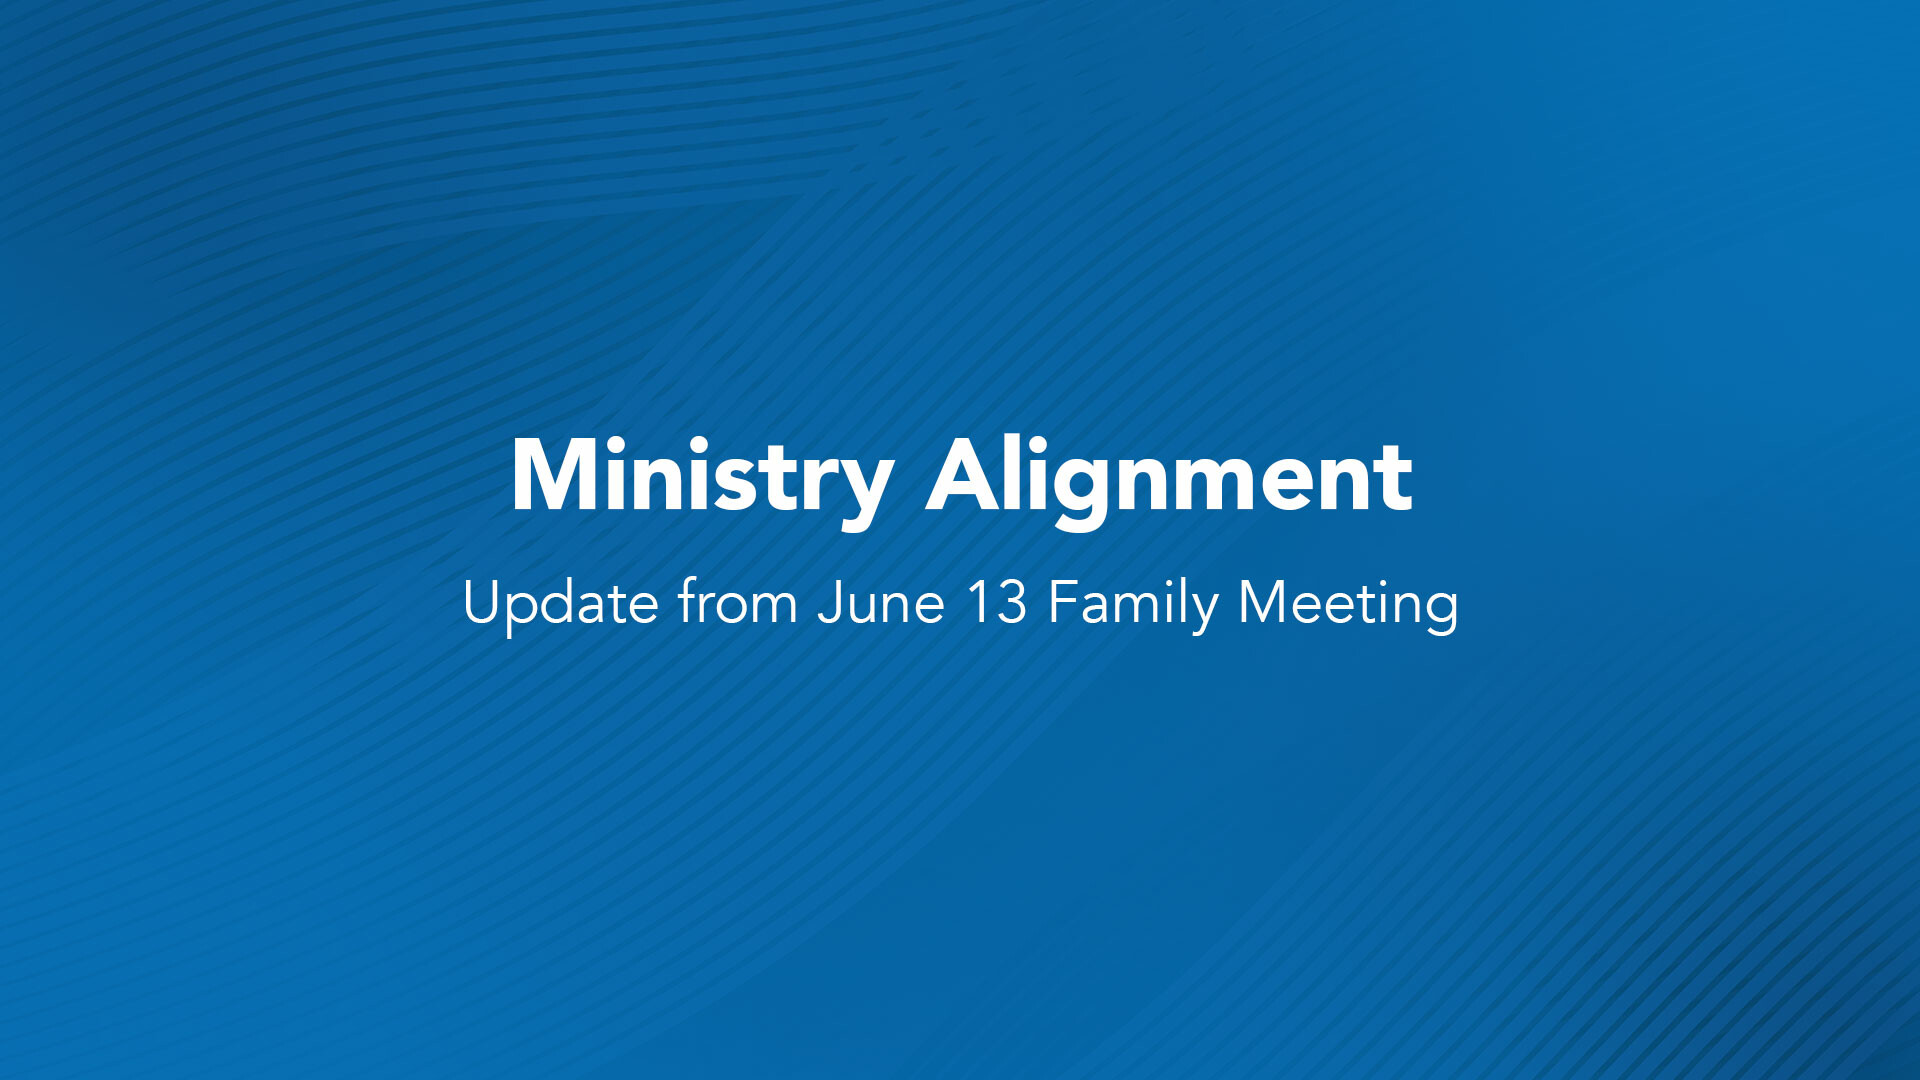 June 13 Family Meeting Alignment Update